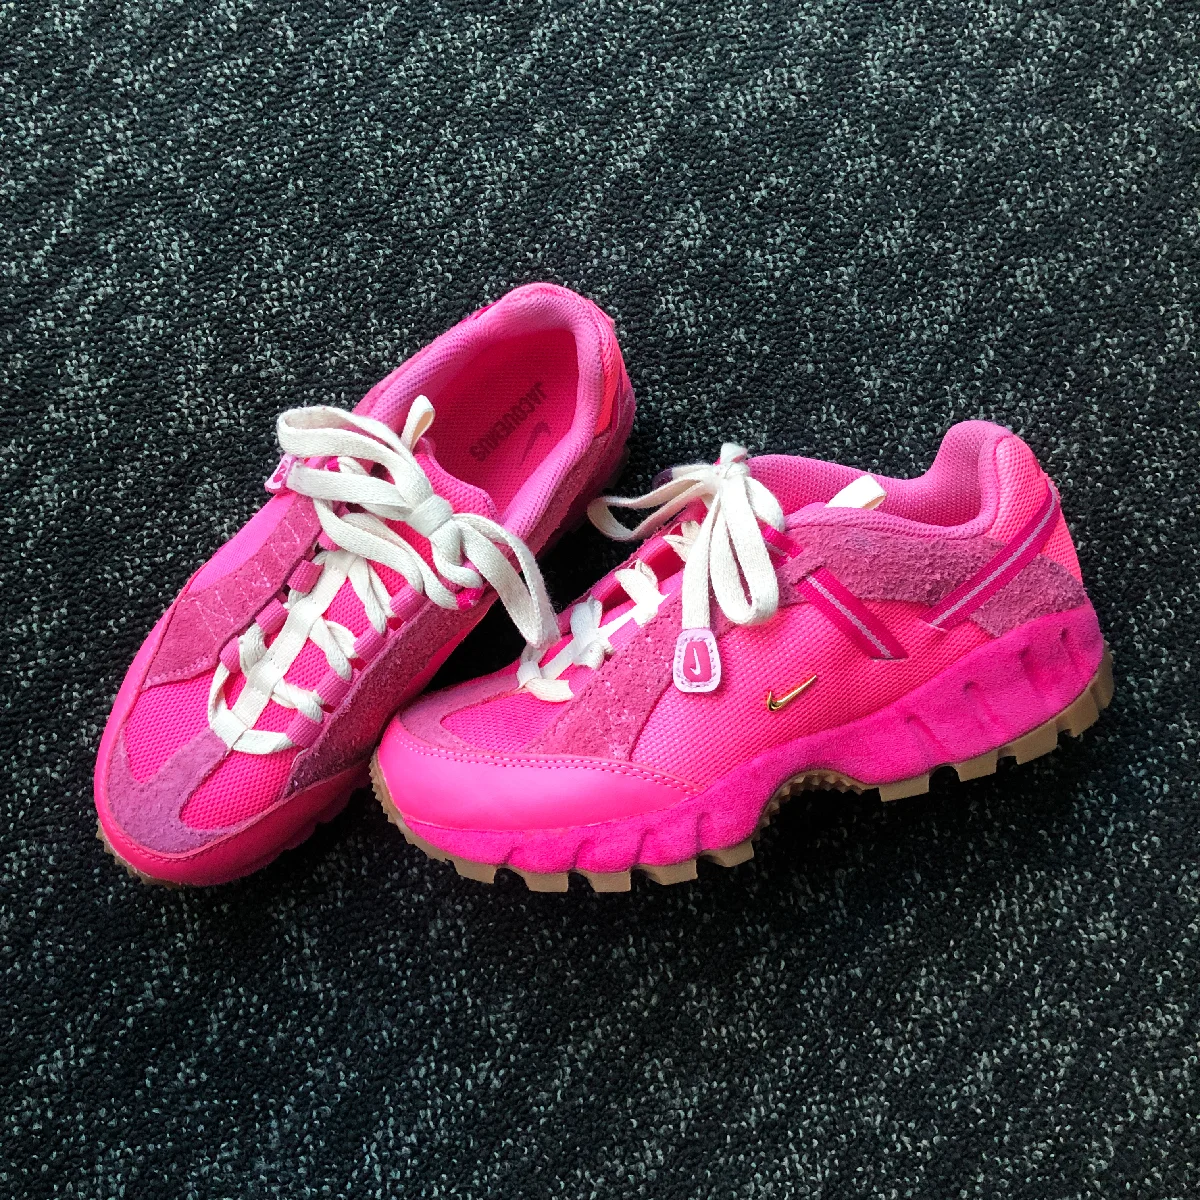 【JACQUEMUS × Nike】のピンクでかなえる、パワフルな足元